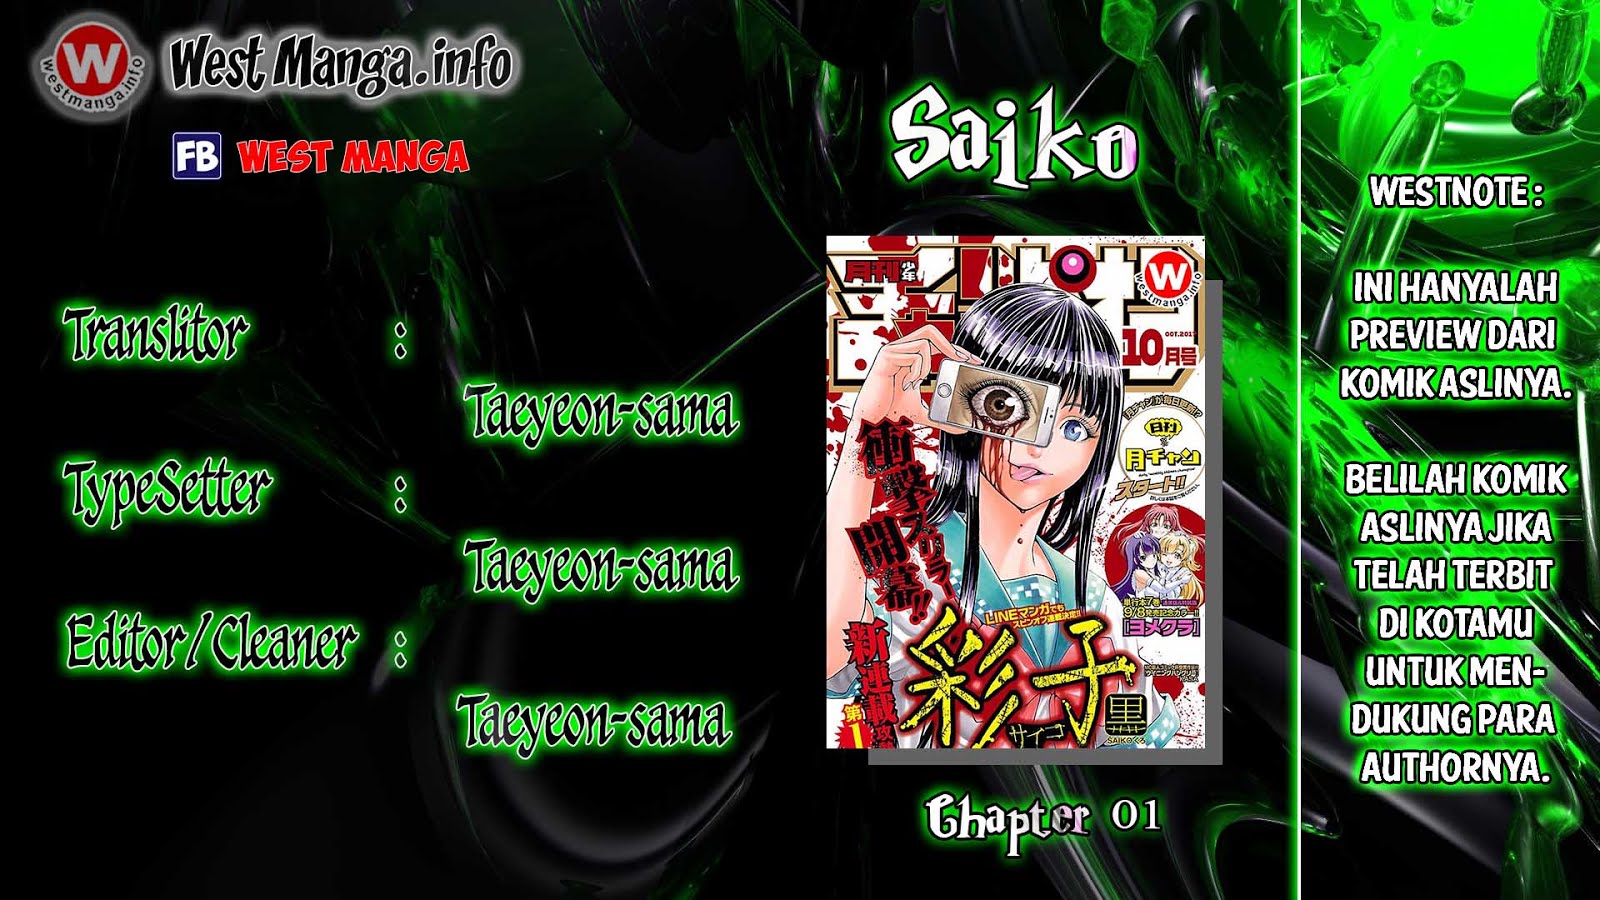 Saiko Chapter 01